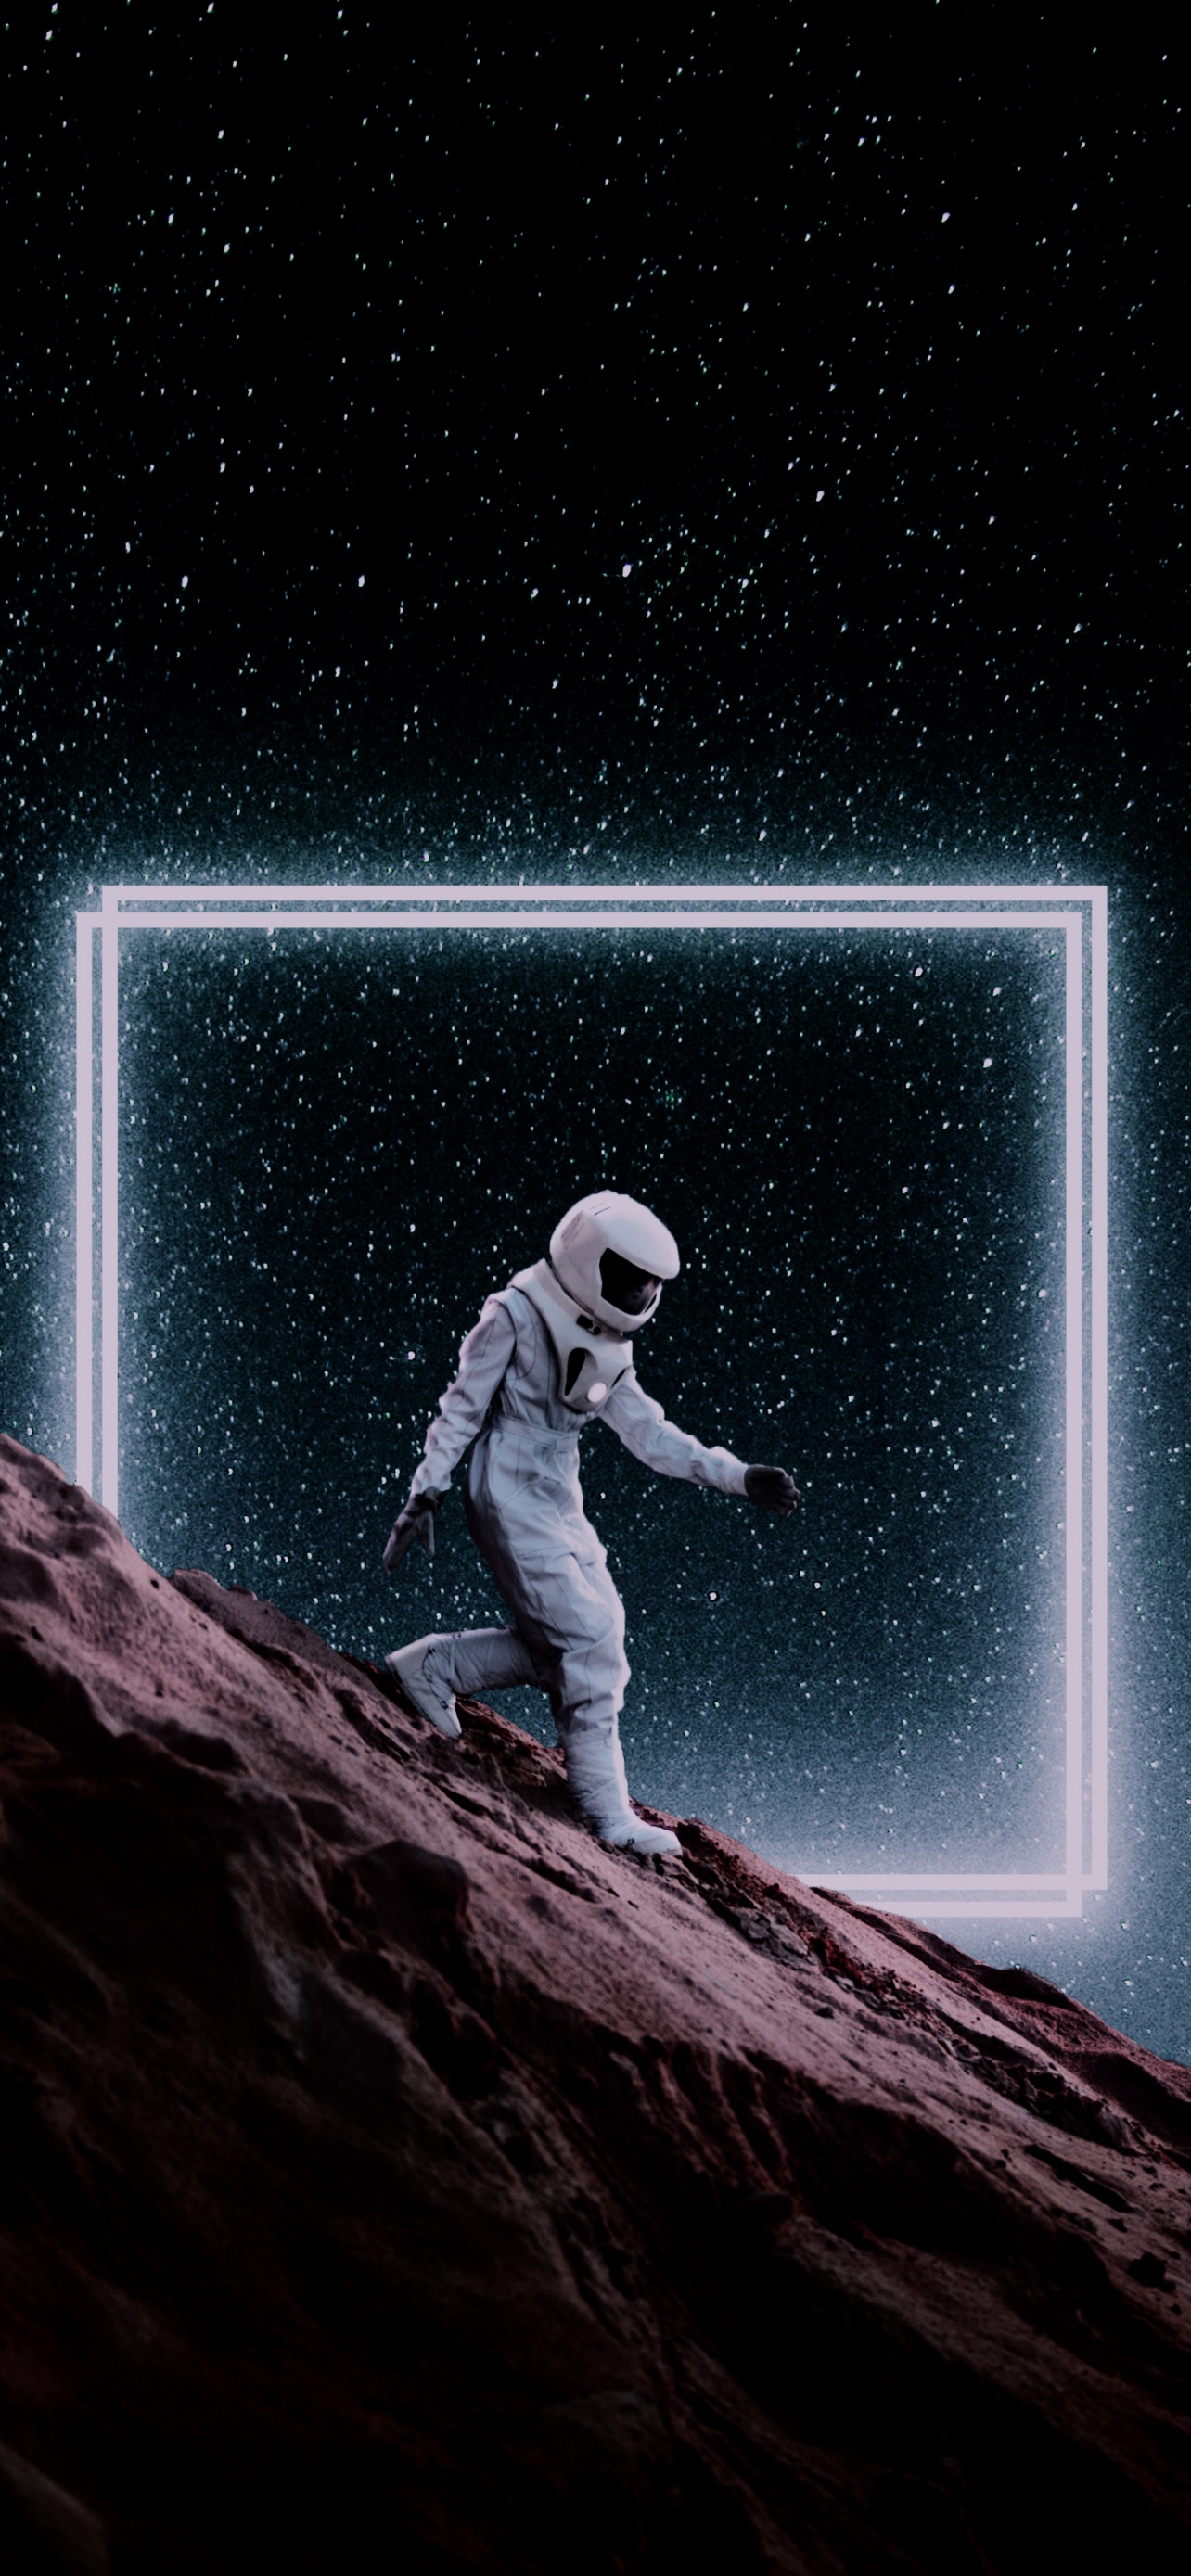 Wallpaper ID 313887  Sci Fi Astronaut Phone Wallpaper Planetary Ring  1440x3040 free download